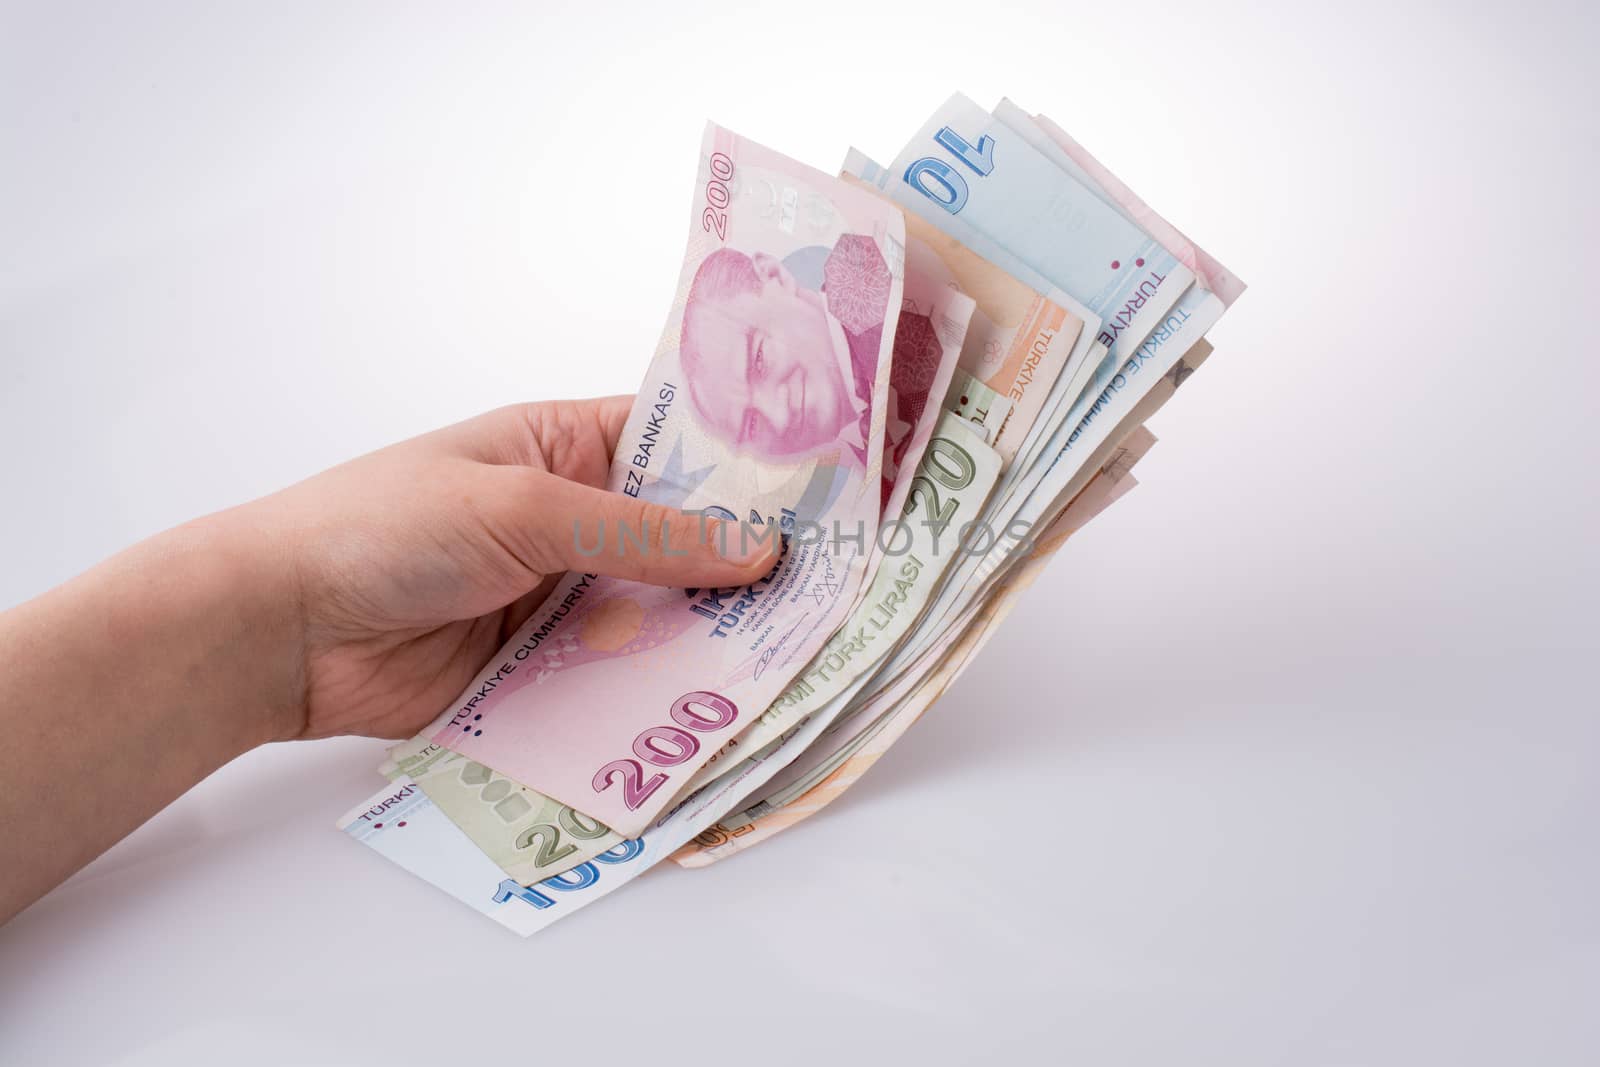 Hand holding Turksh Lira banknotes  on white background